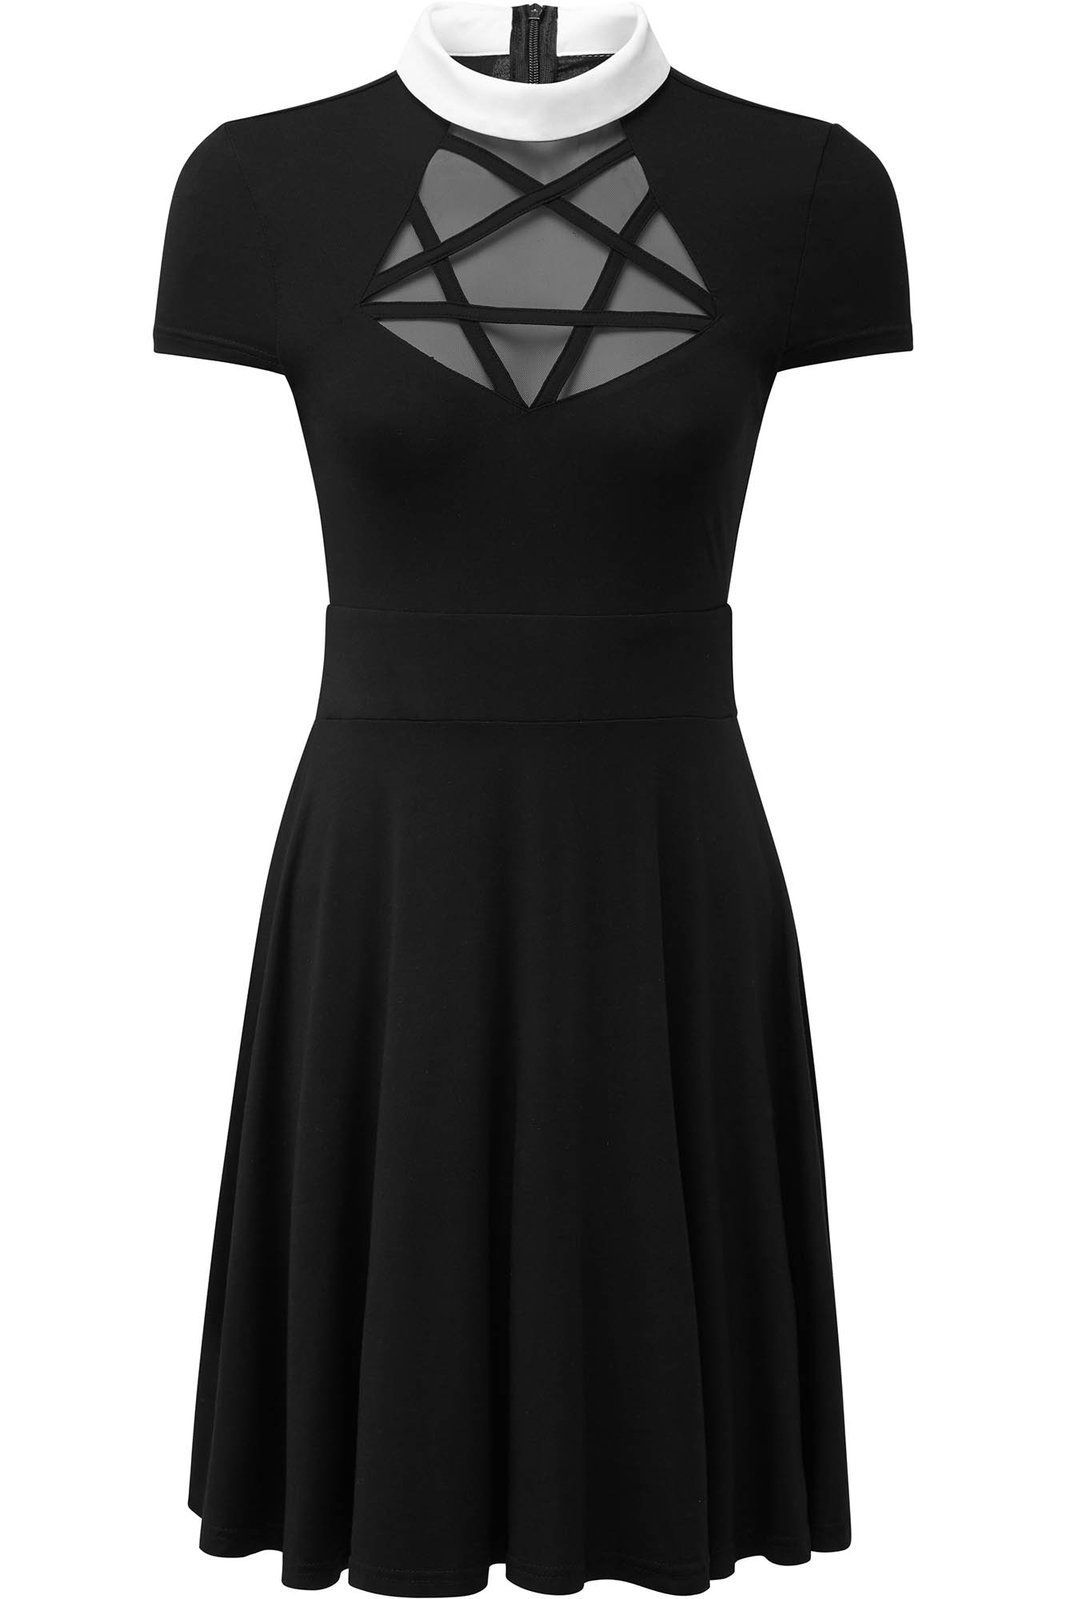 Hades Skater Dress [B] - Hades Skater Dress [B] -   16 style Dress black ideas